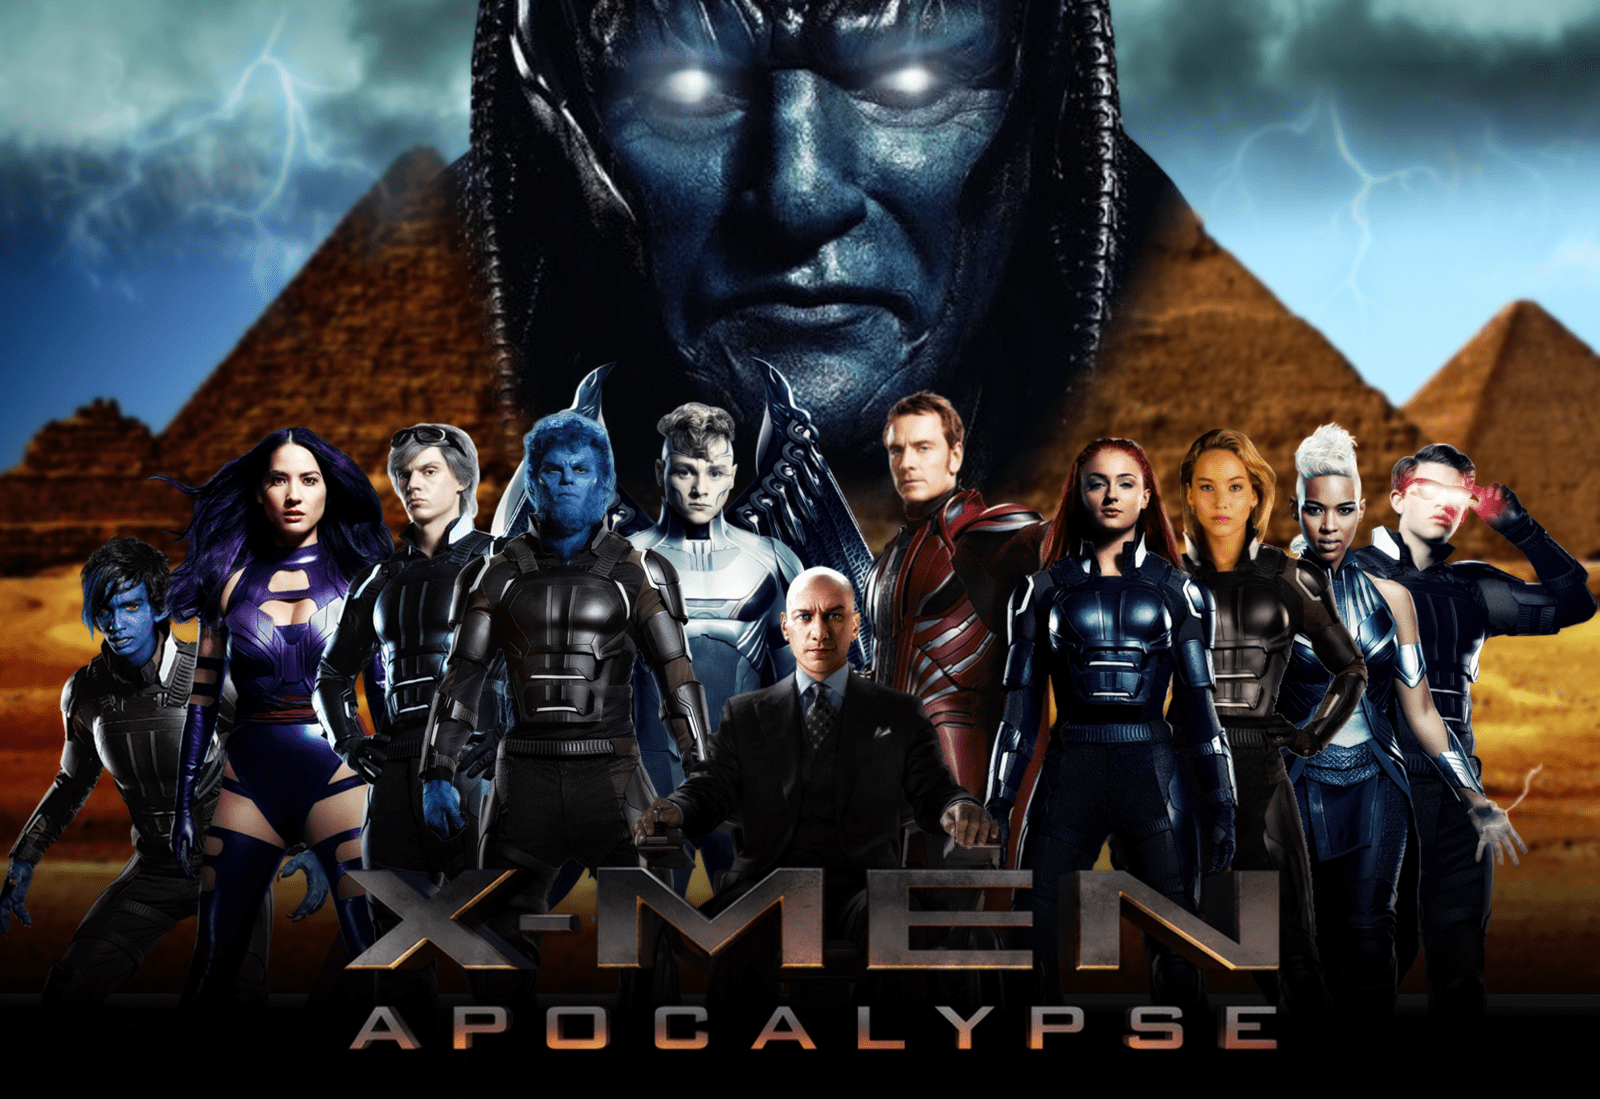 x men apocalypse free movie download